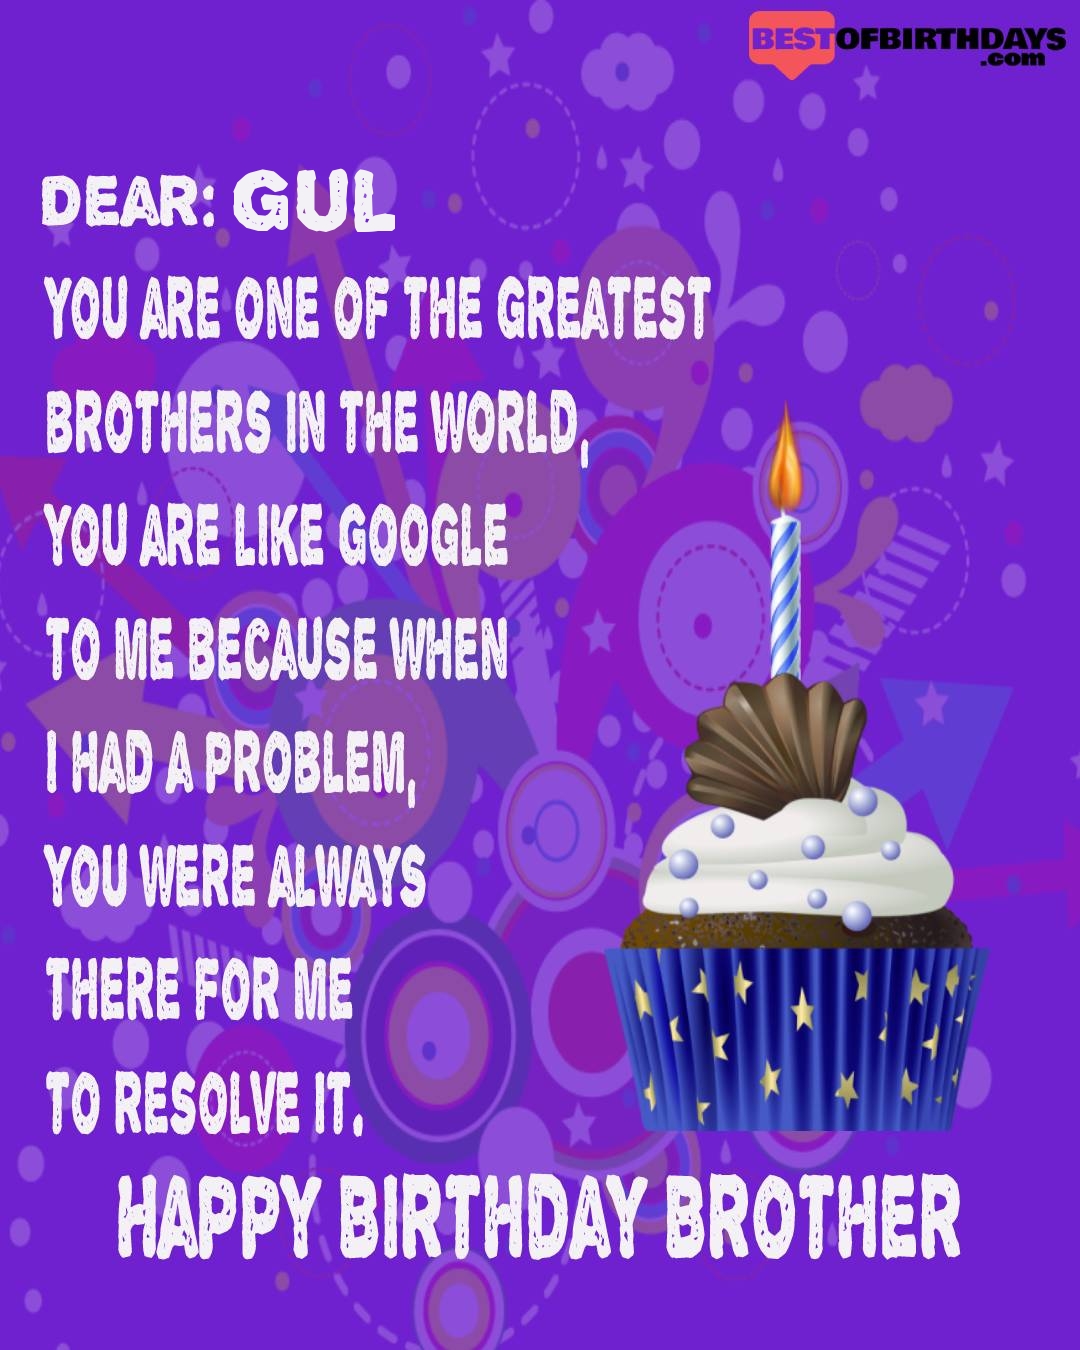 Happy birthday gul bhai brother bro